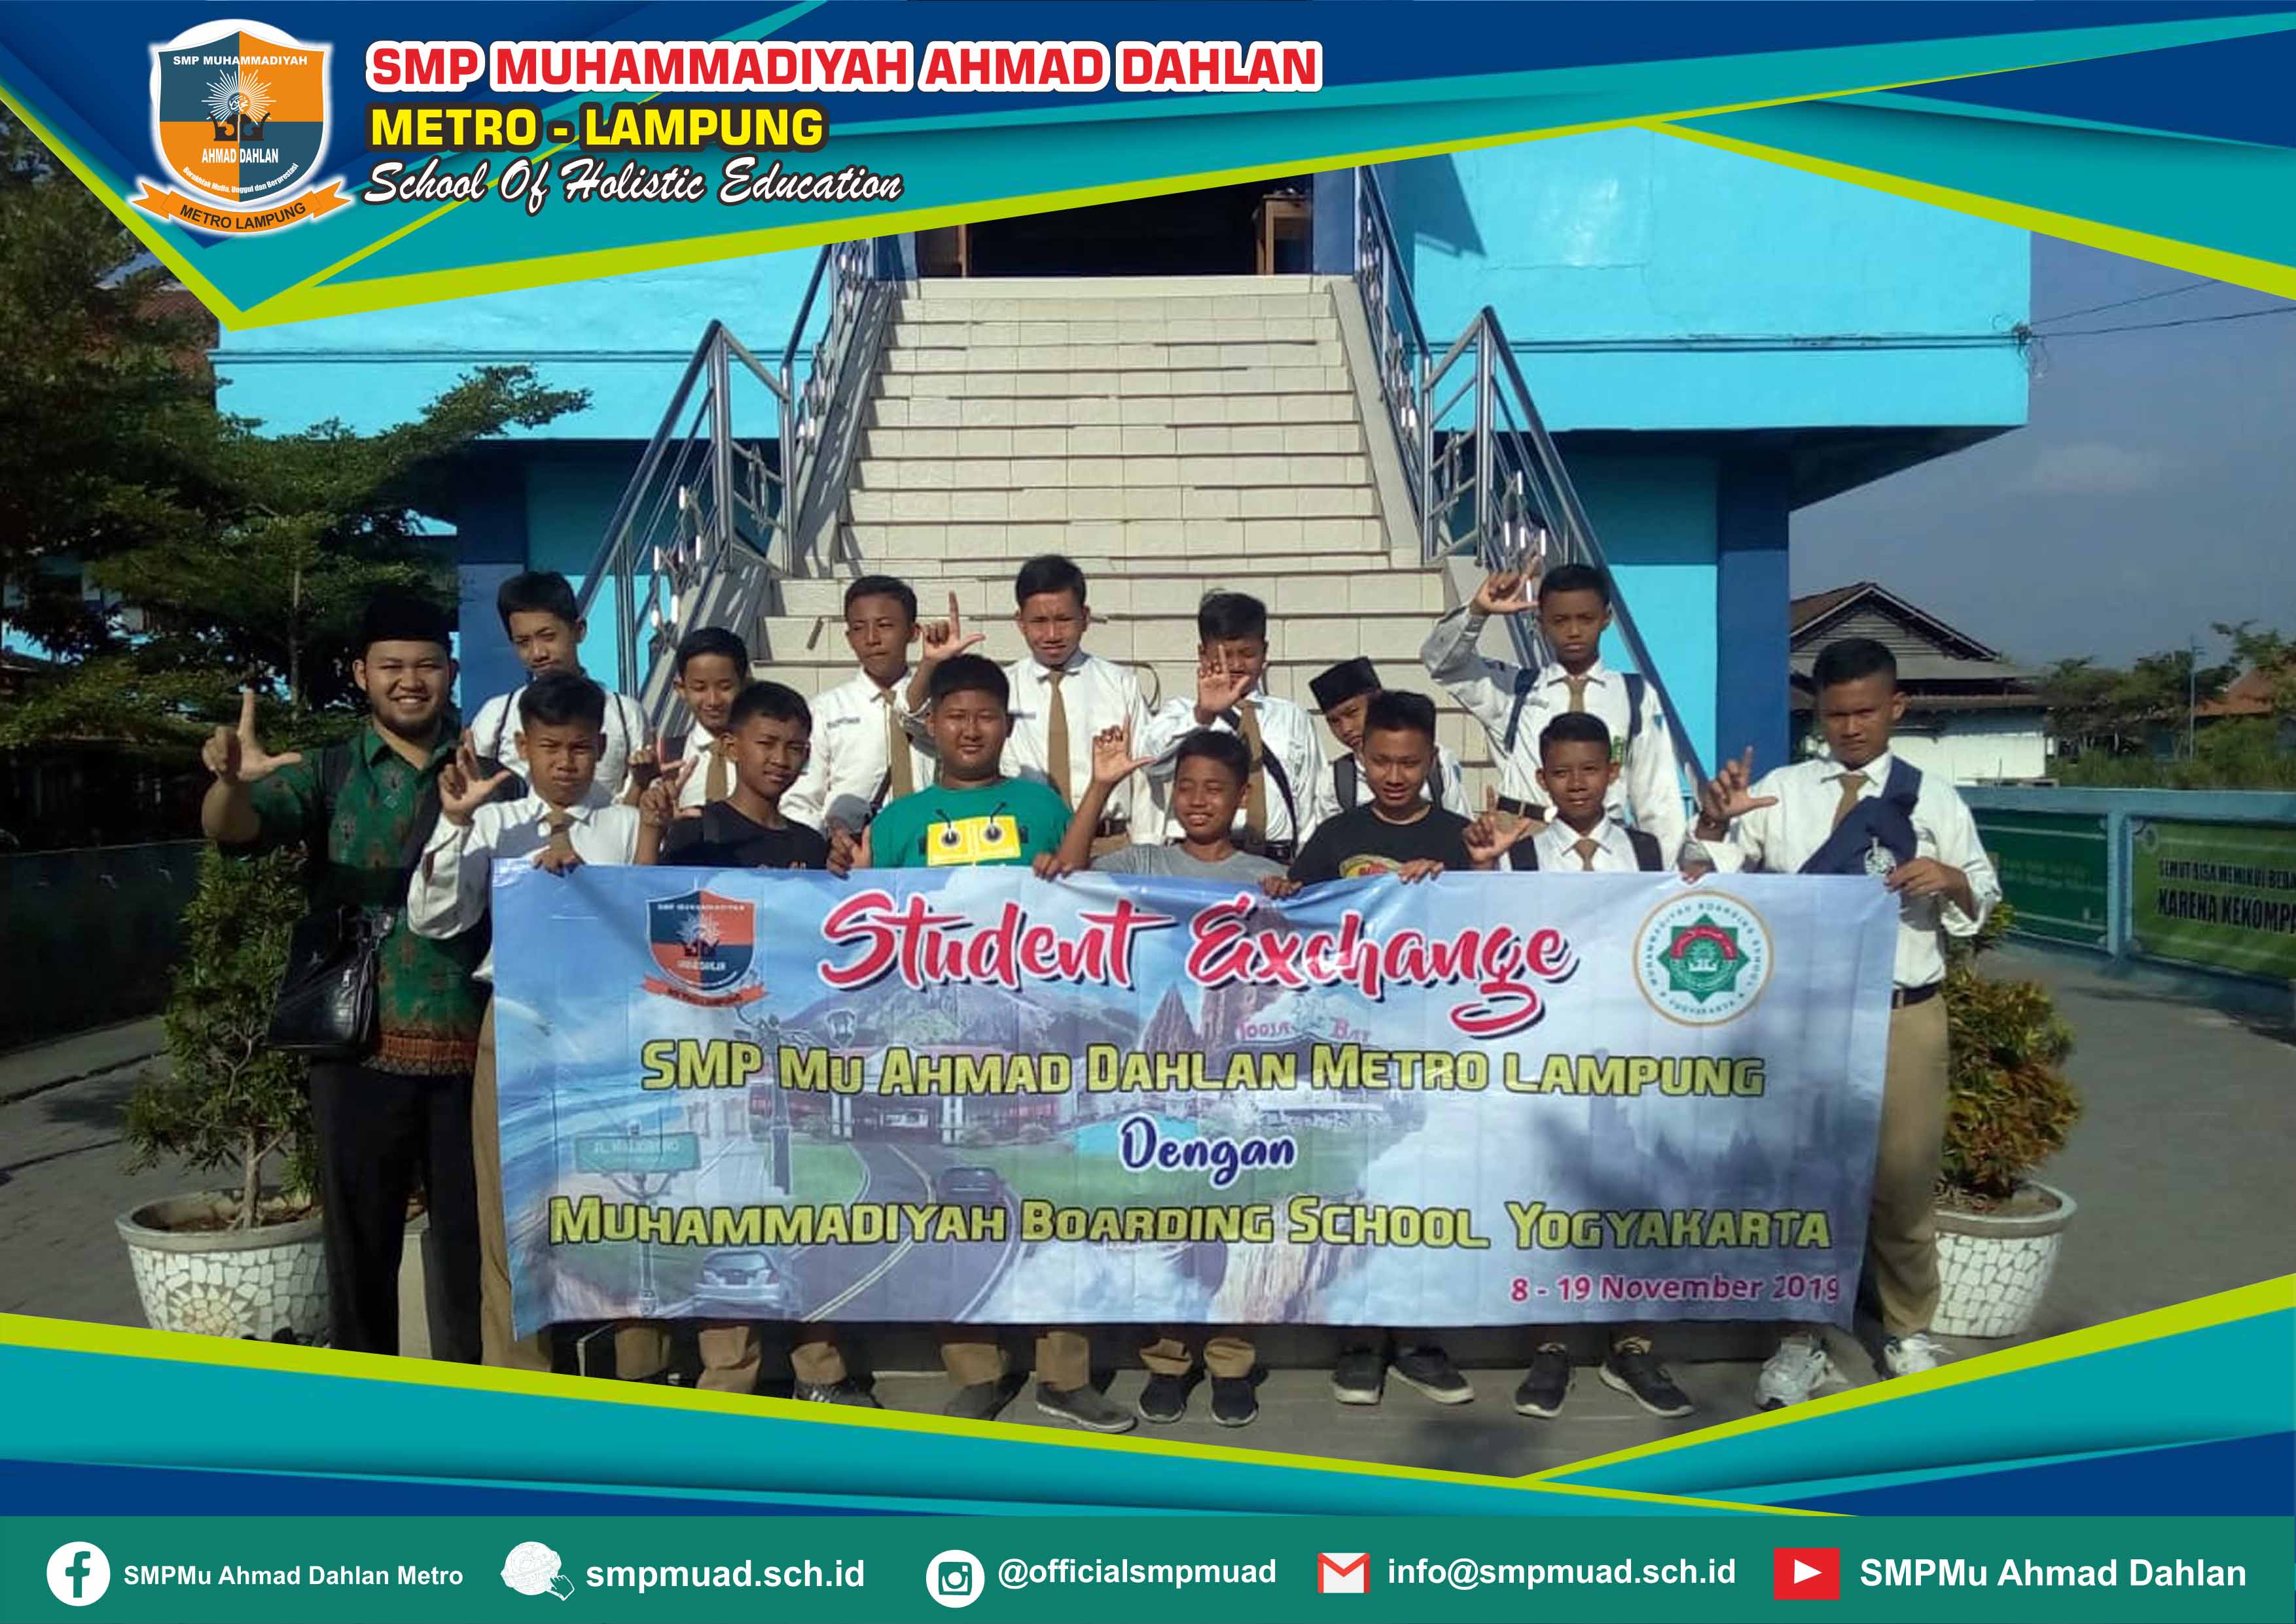 Student Exchange Day 4 Muhammadiyah Boarding School MBS Yogyakarta